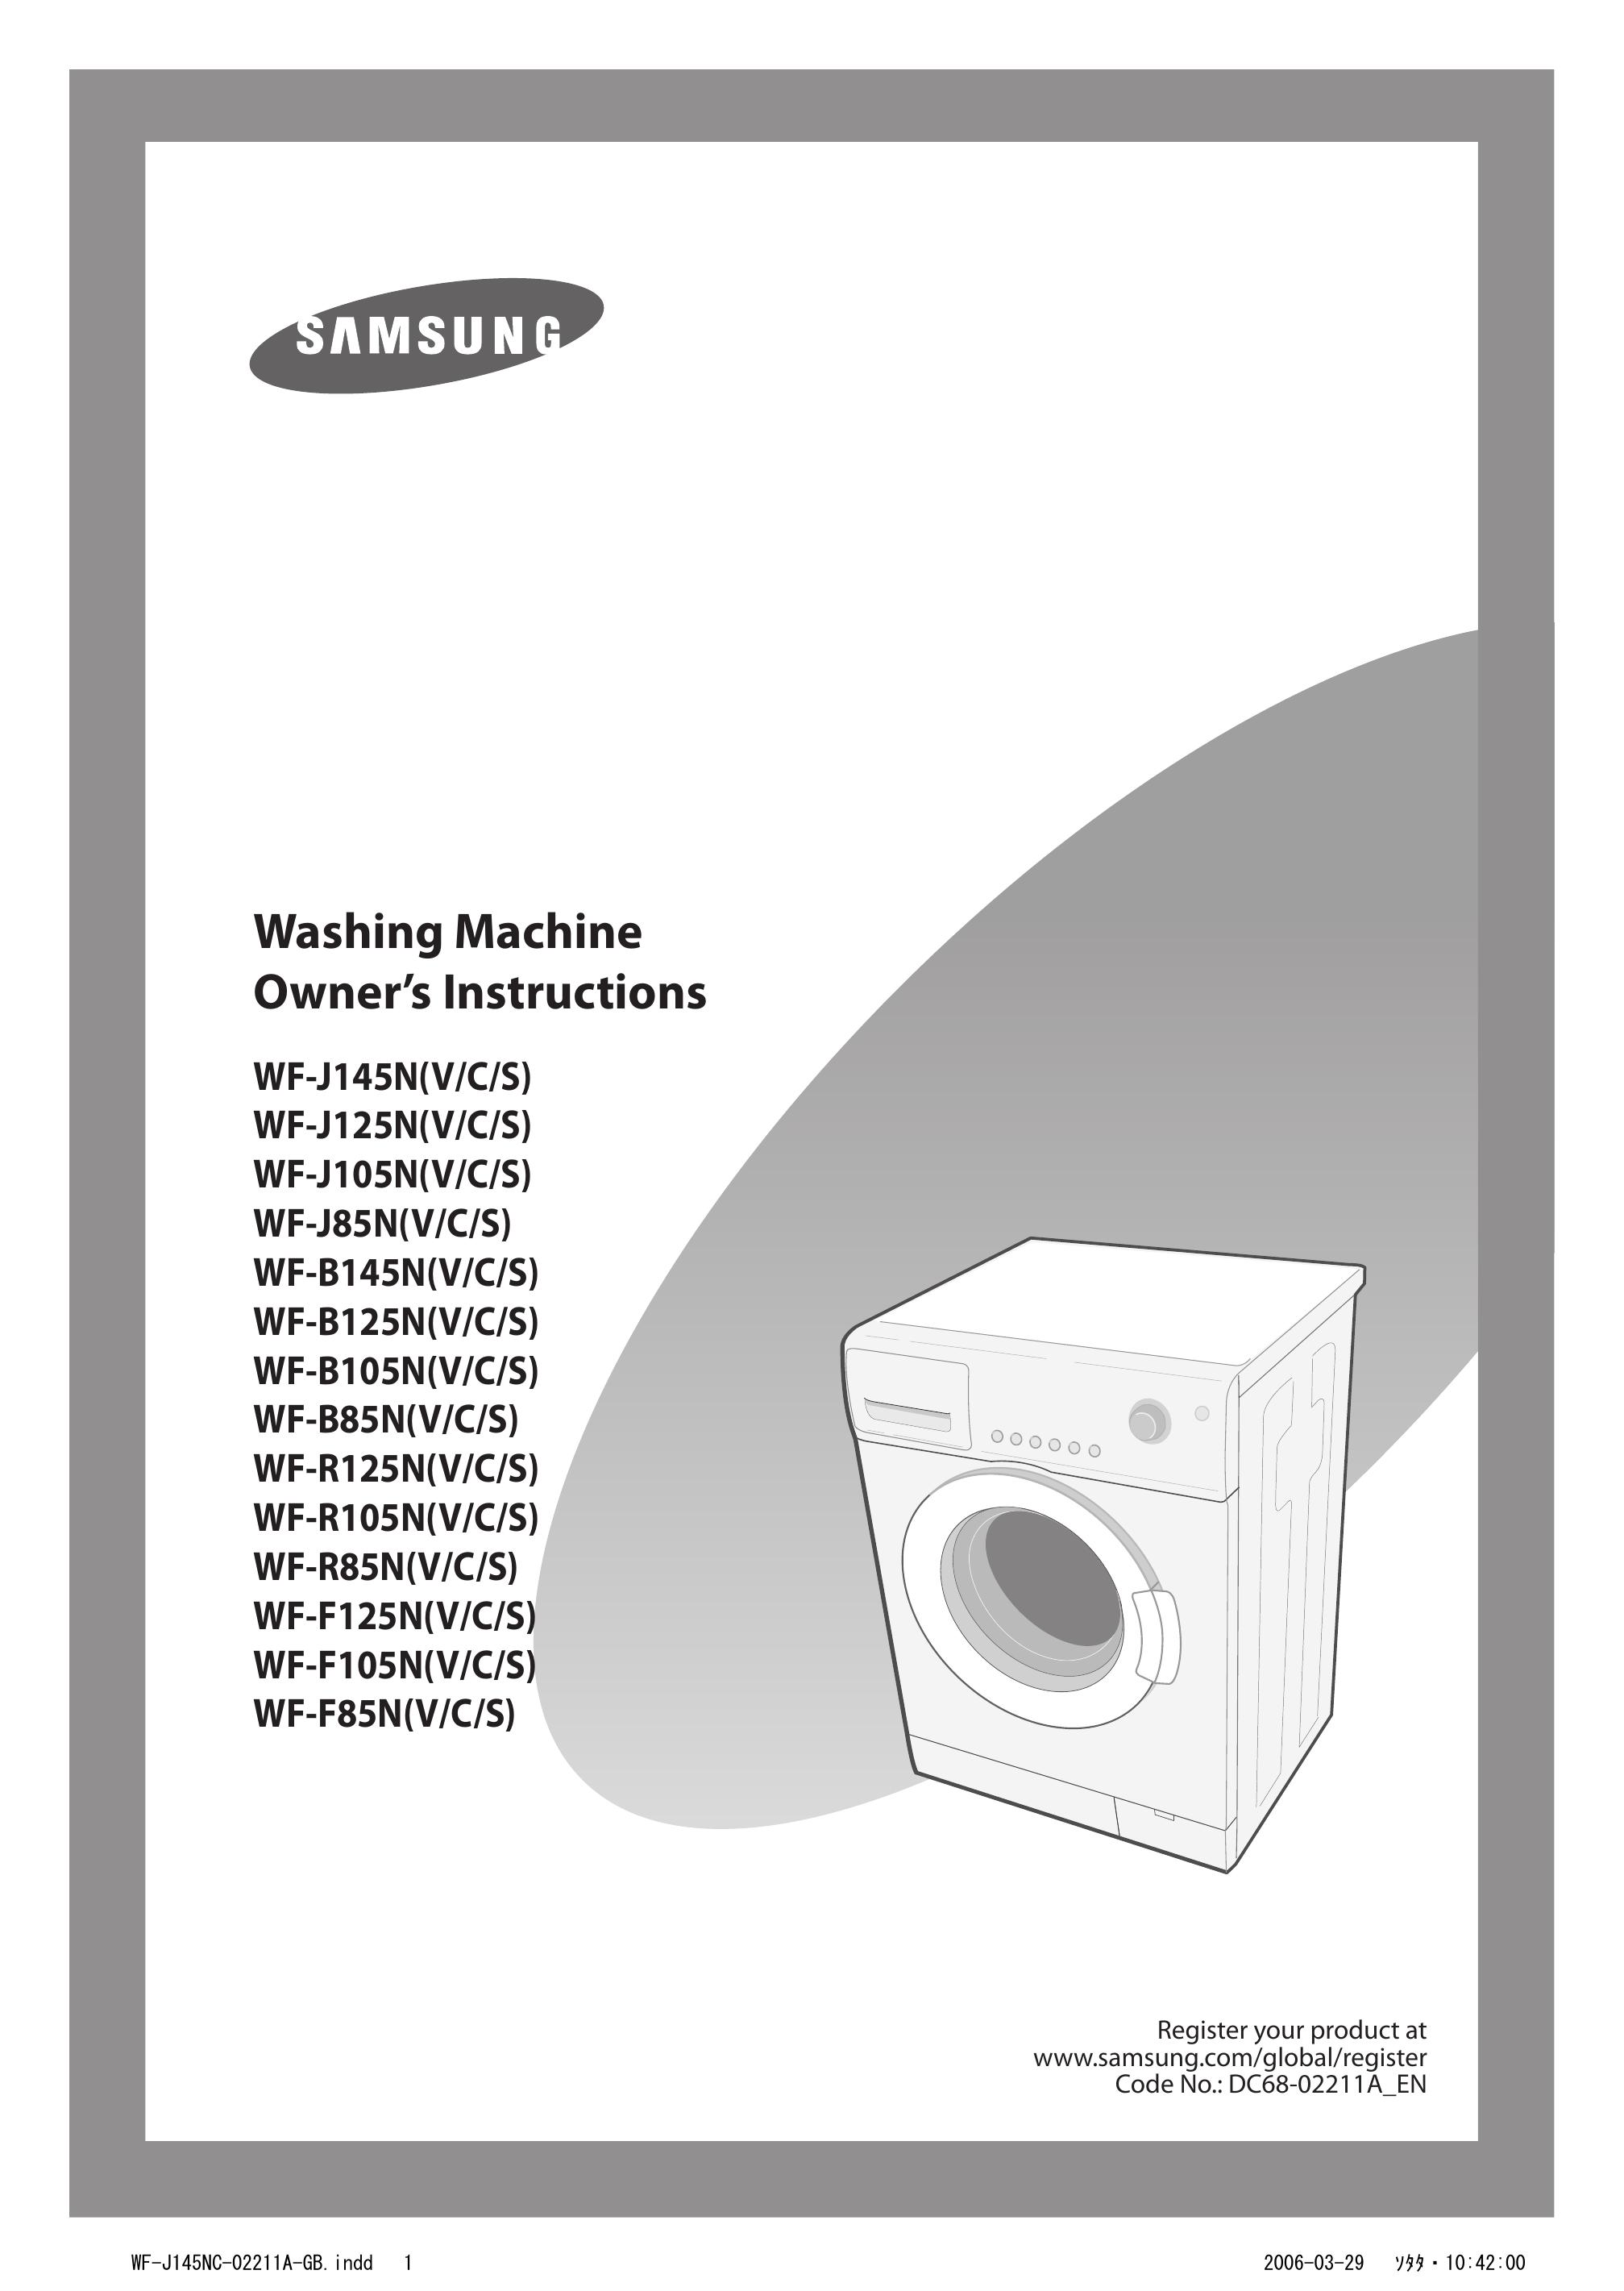 Samsung WF-B105N(V/C/S) Washer/Dryer User Manual